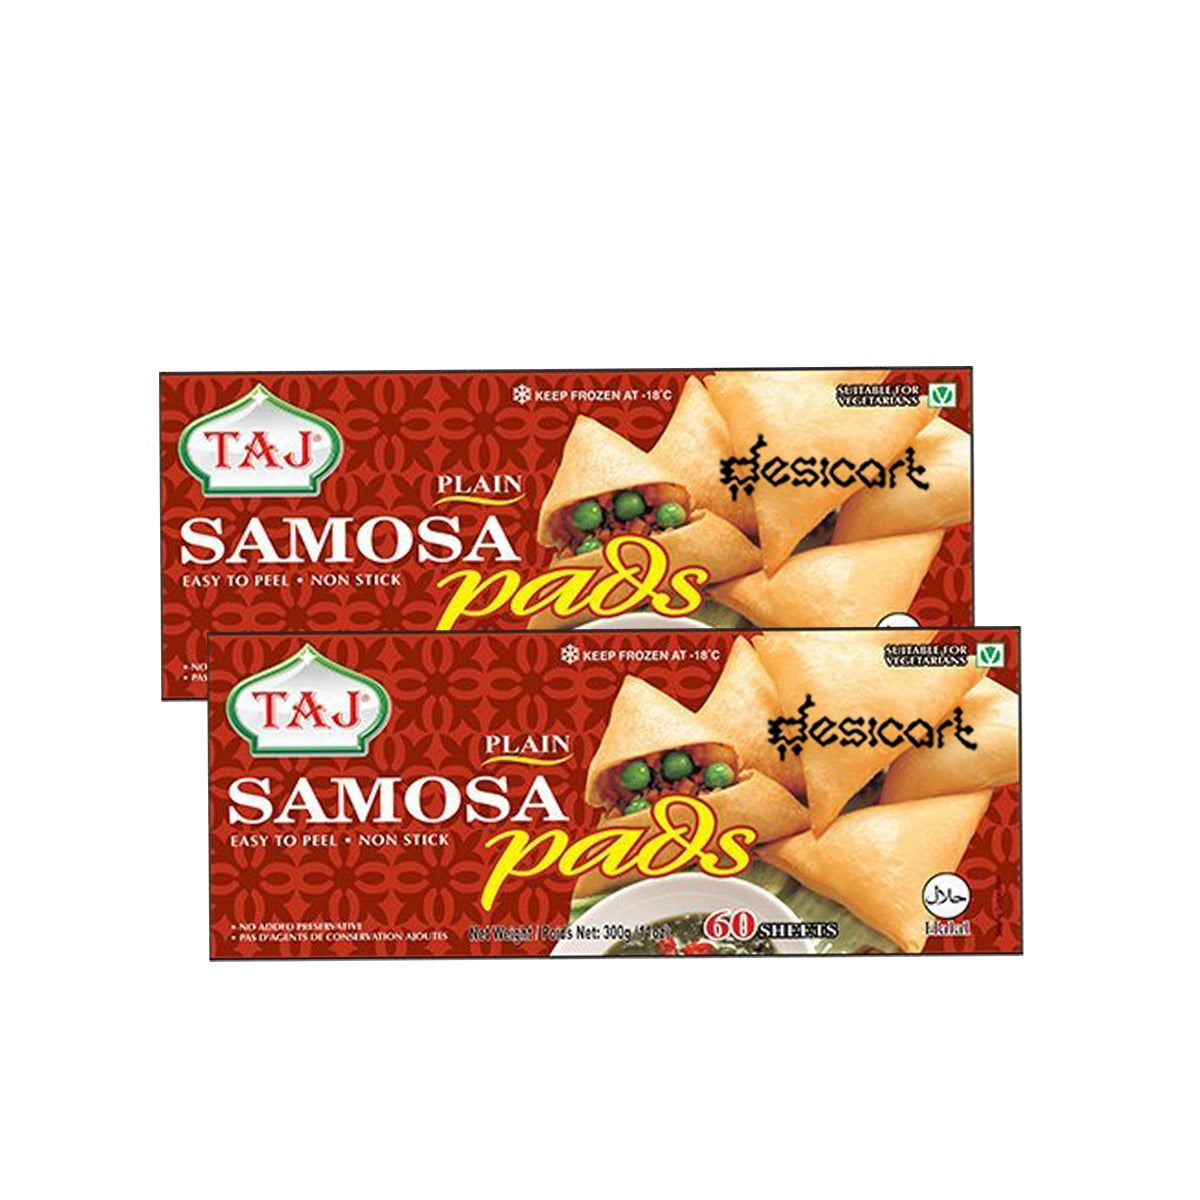 Taj Samosa Pads 60 Sheets (Pack of 2)